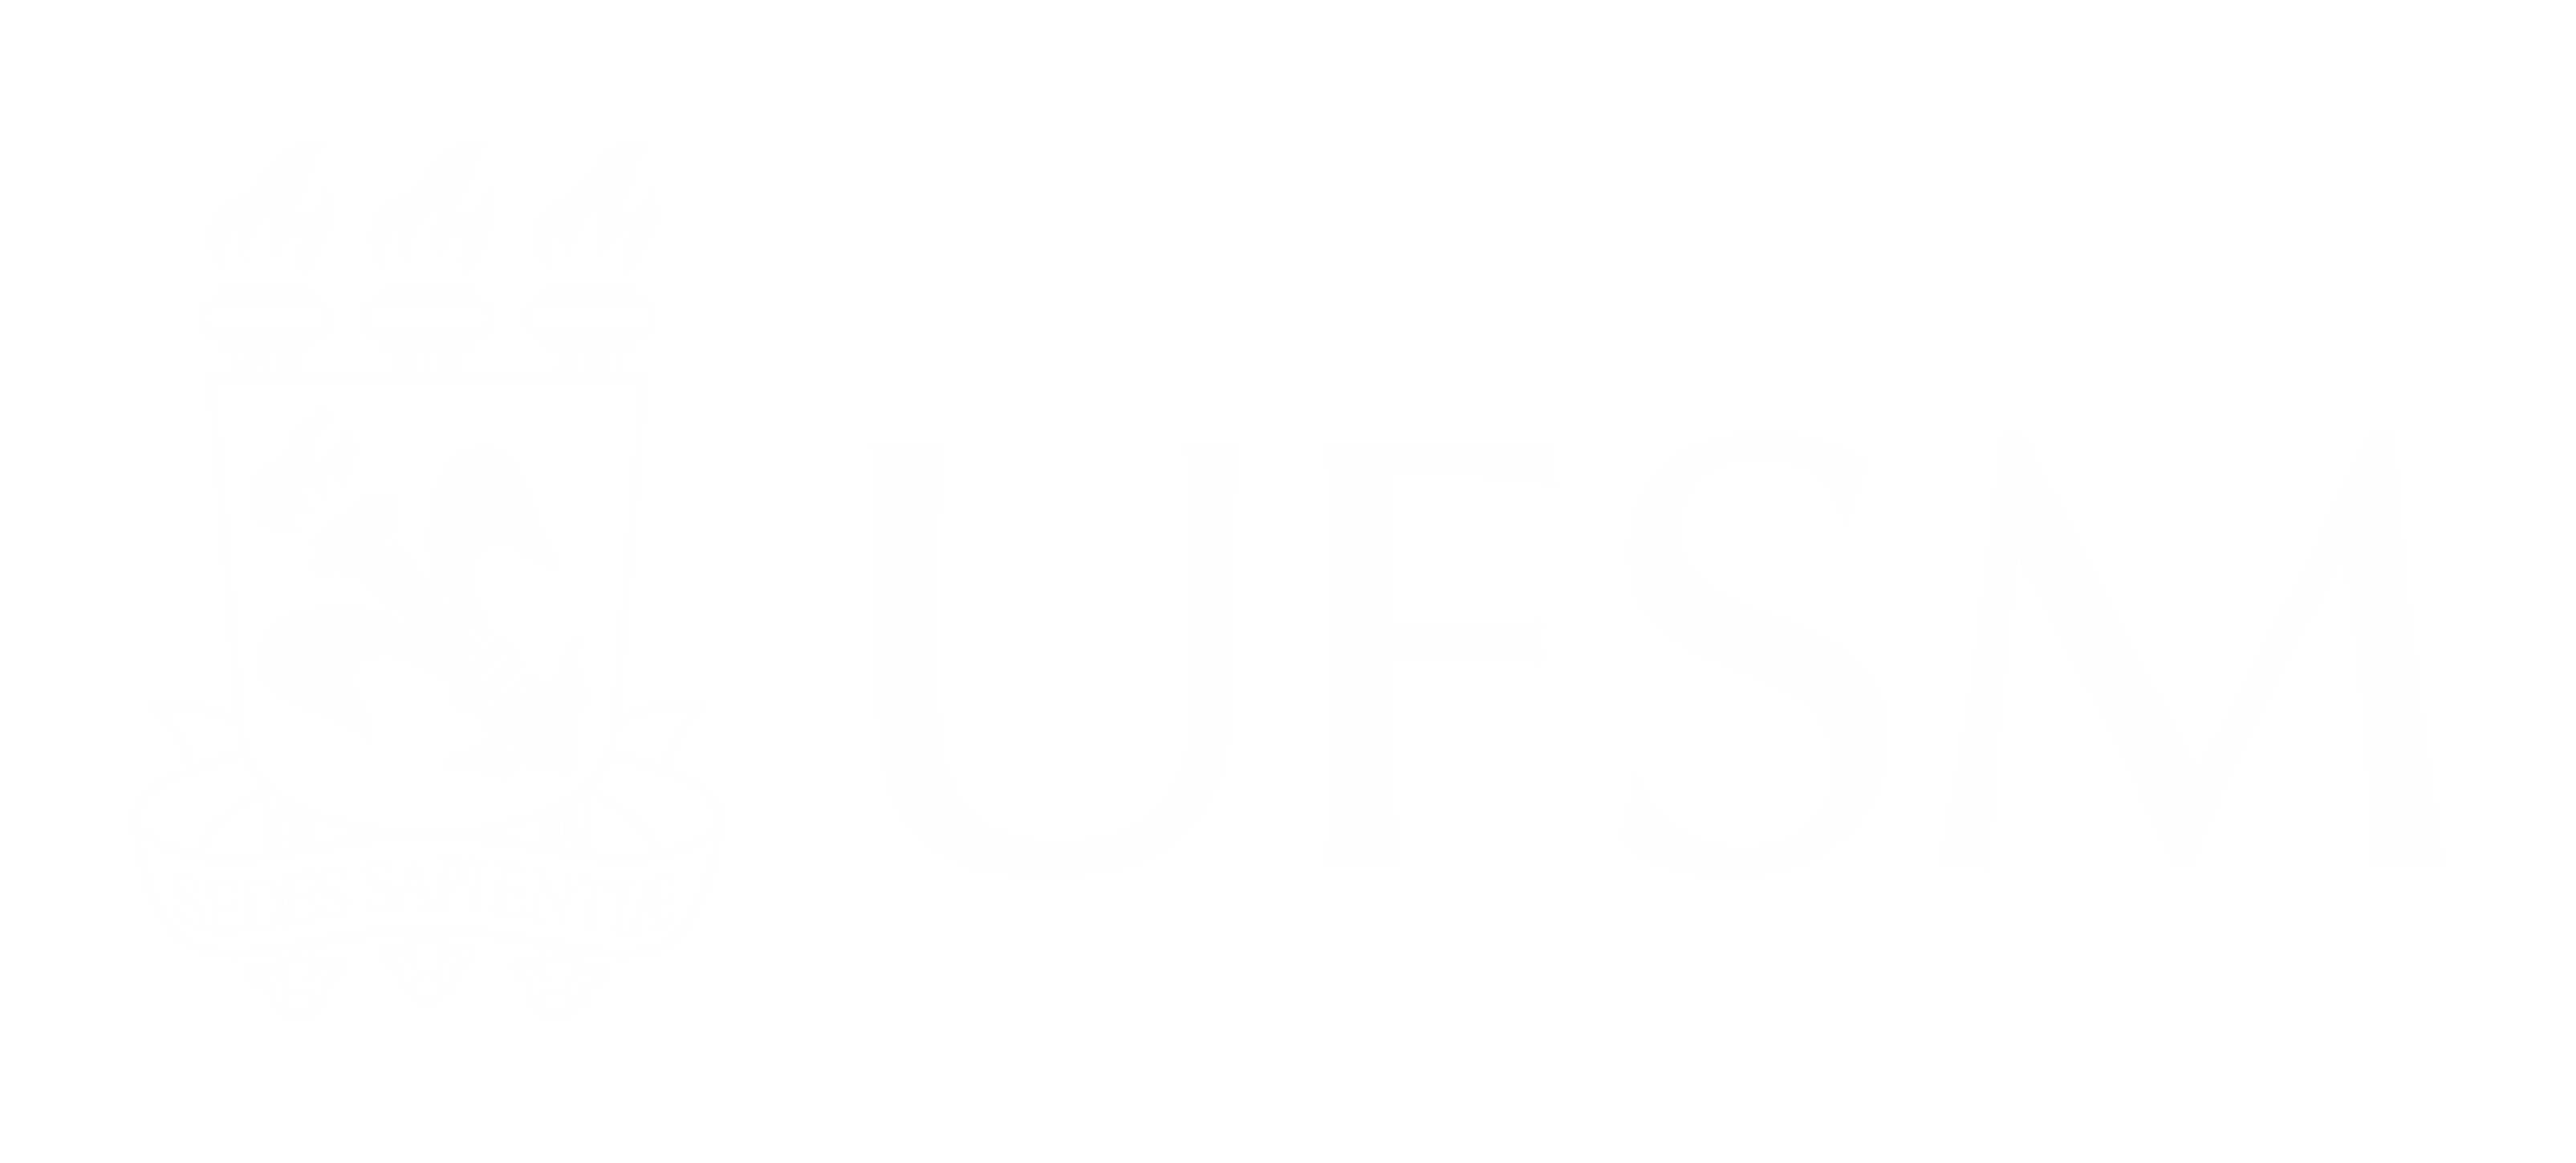 Institute of Informatics - UFRGS